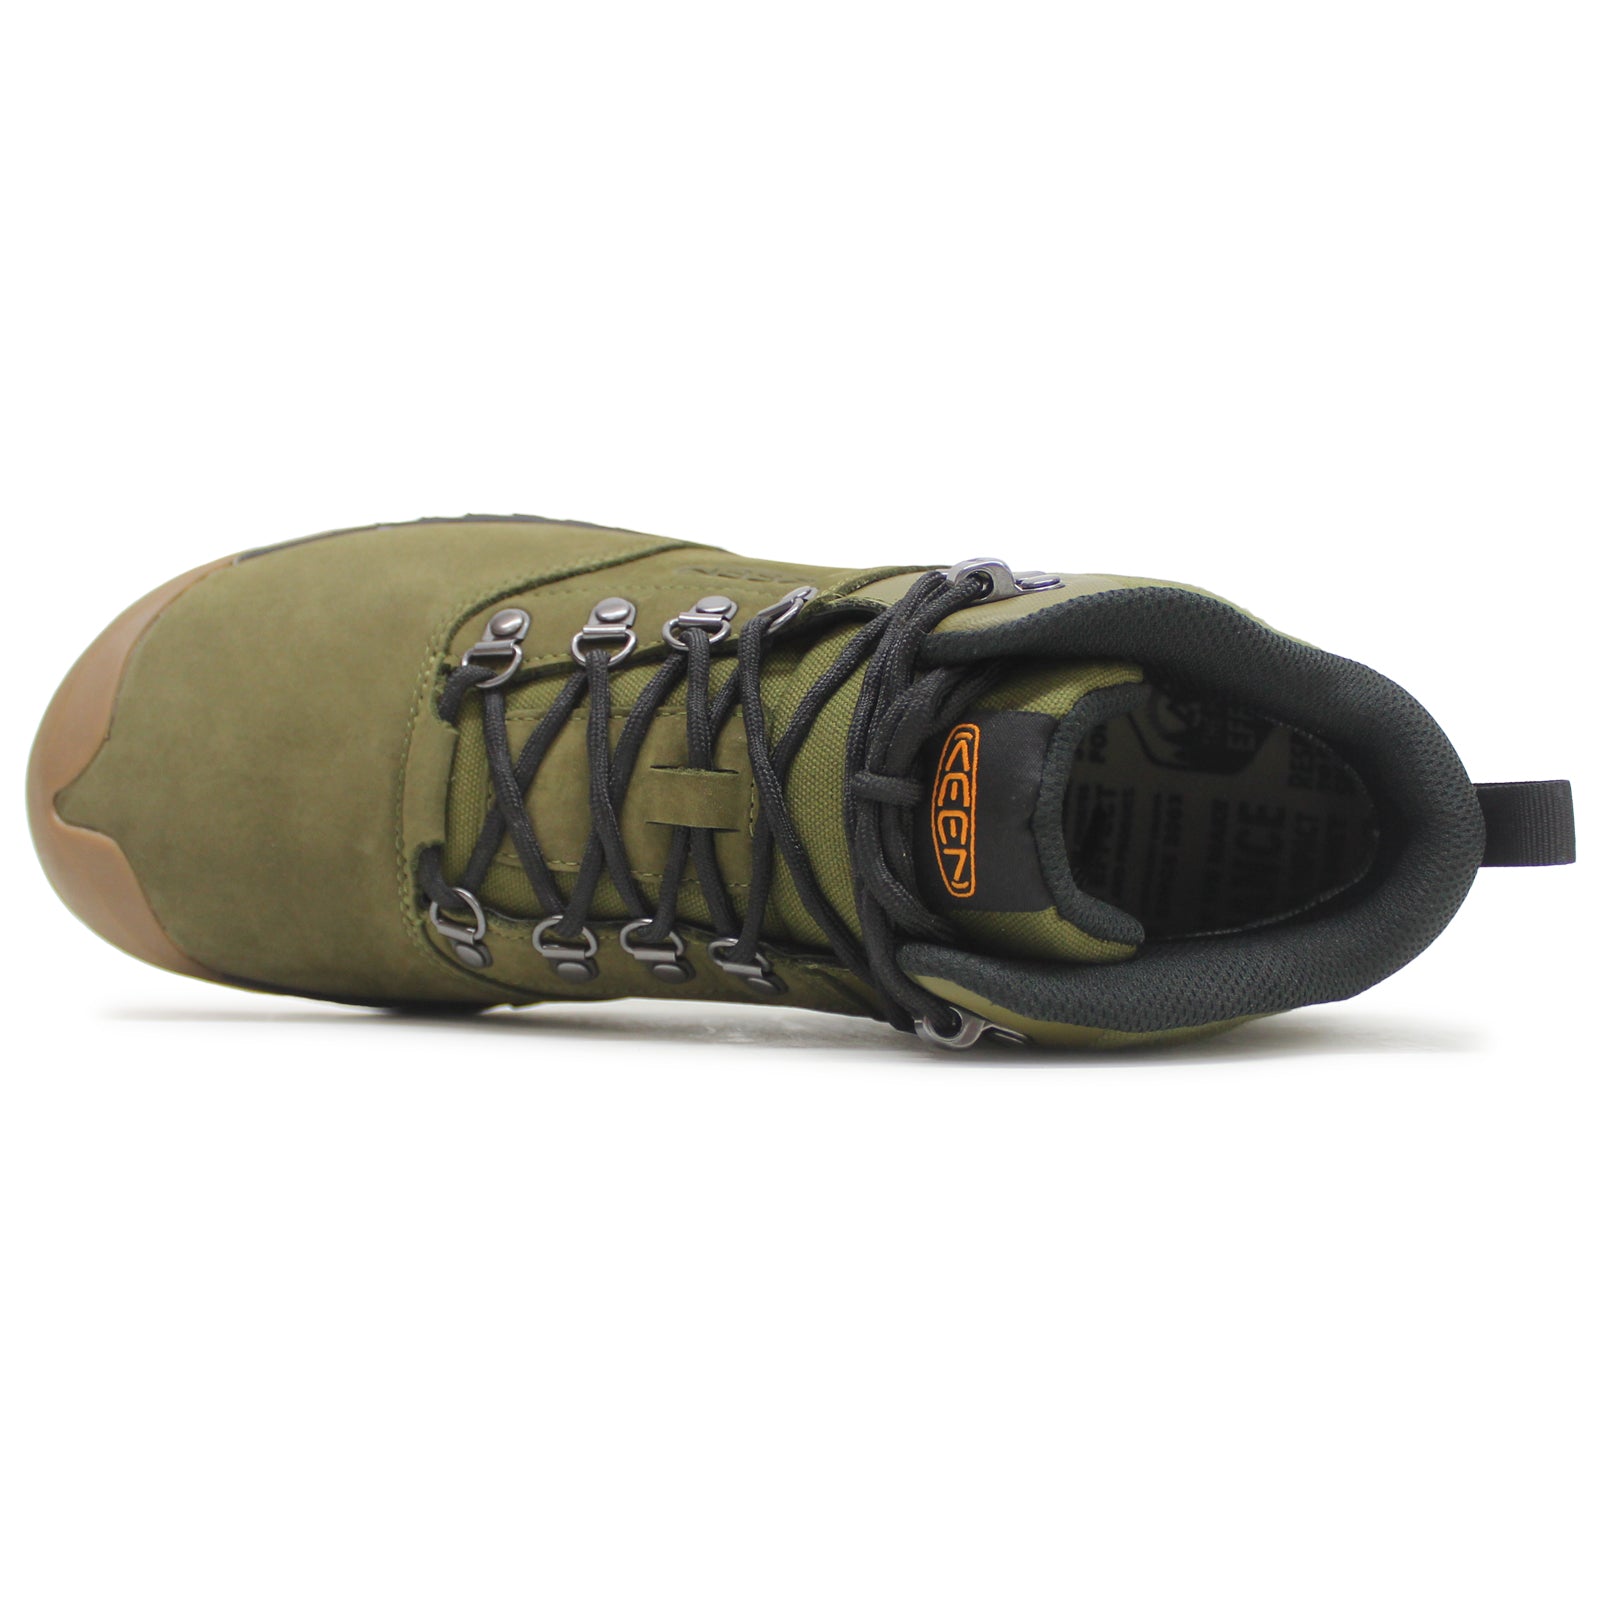 Keen NXIS Explorer Mid Waterproof Nubuck Leather Men's Lightweight Hiking Boots#color_dark olive black